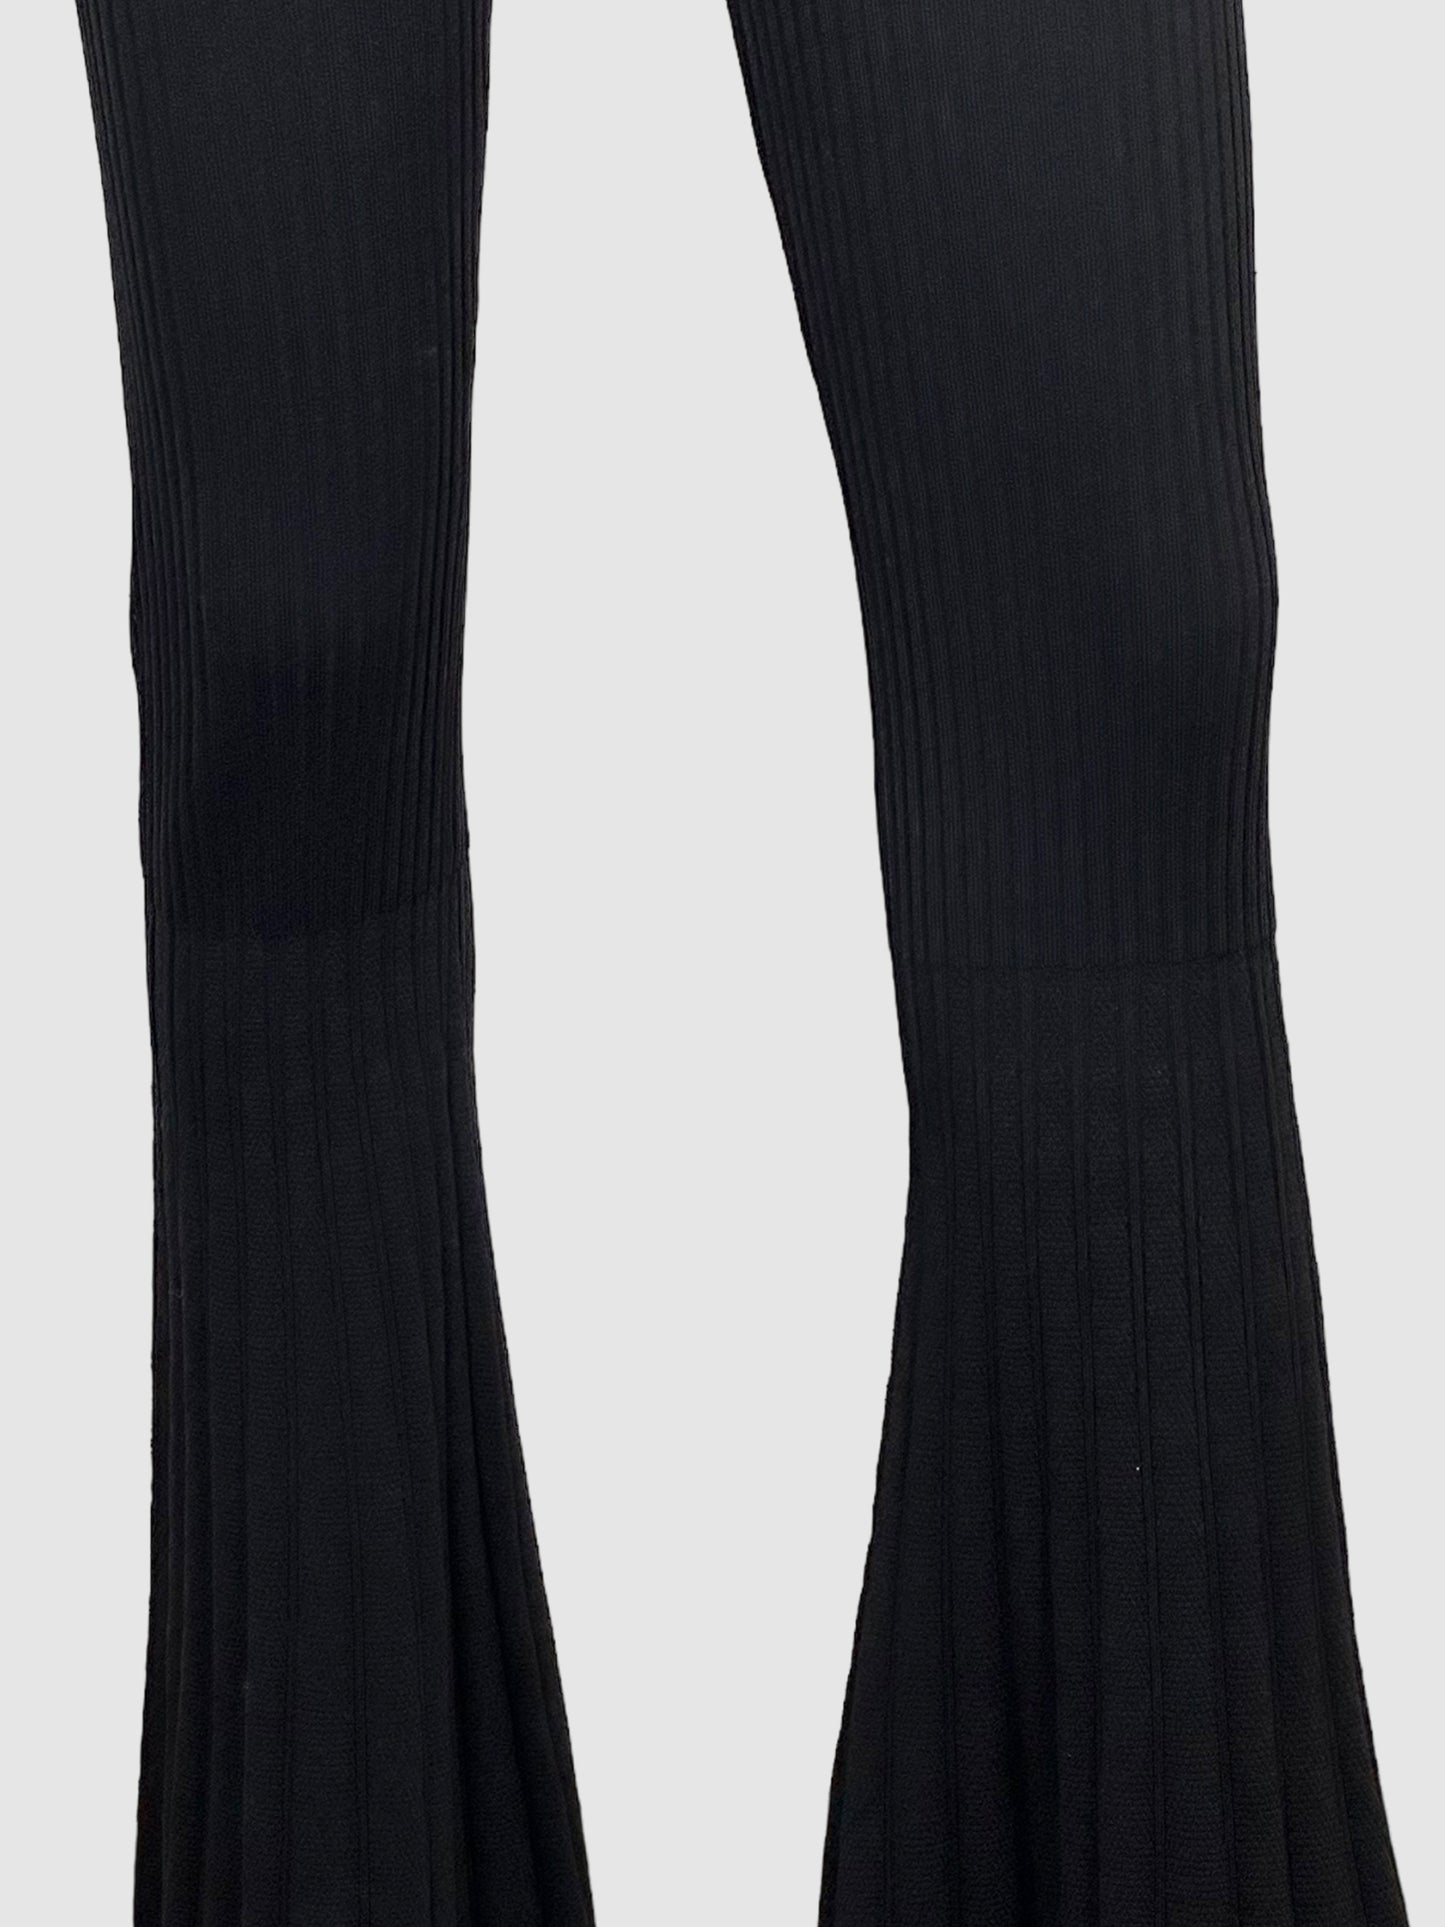 Sandro Ribbed Knit Pants - Size 38